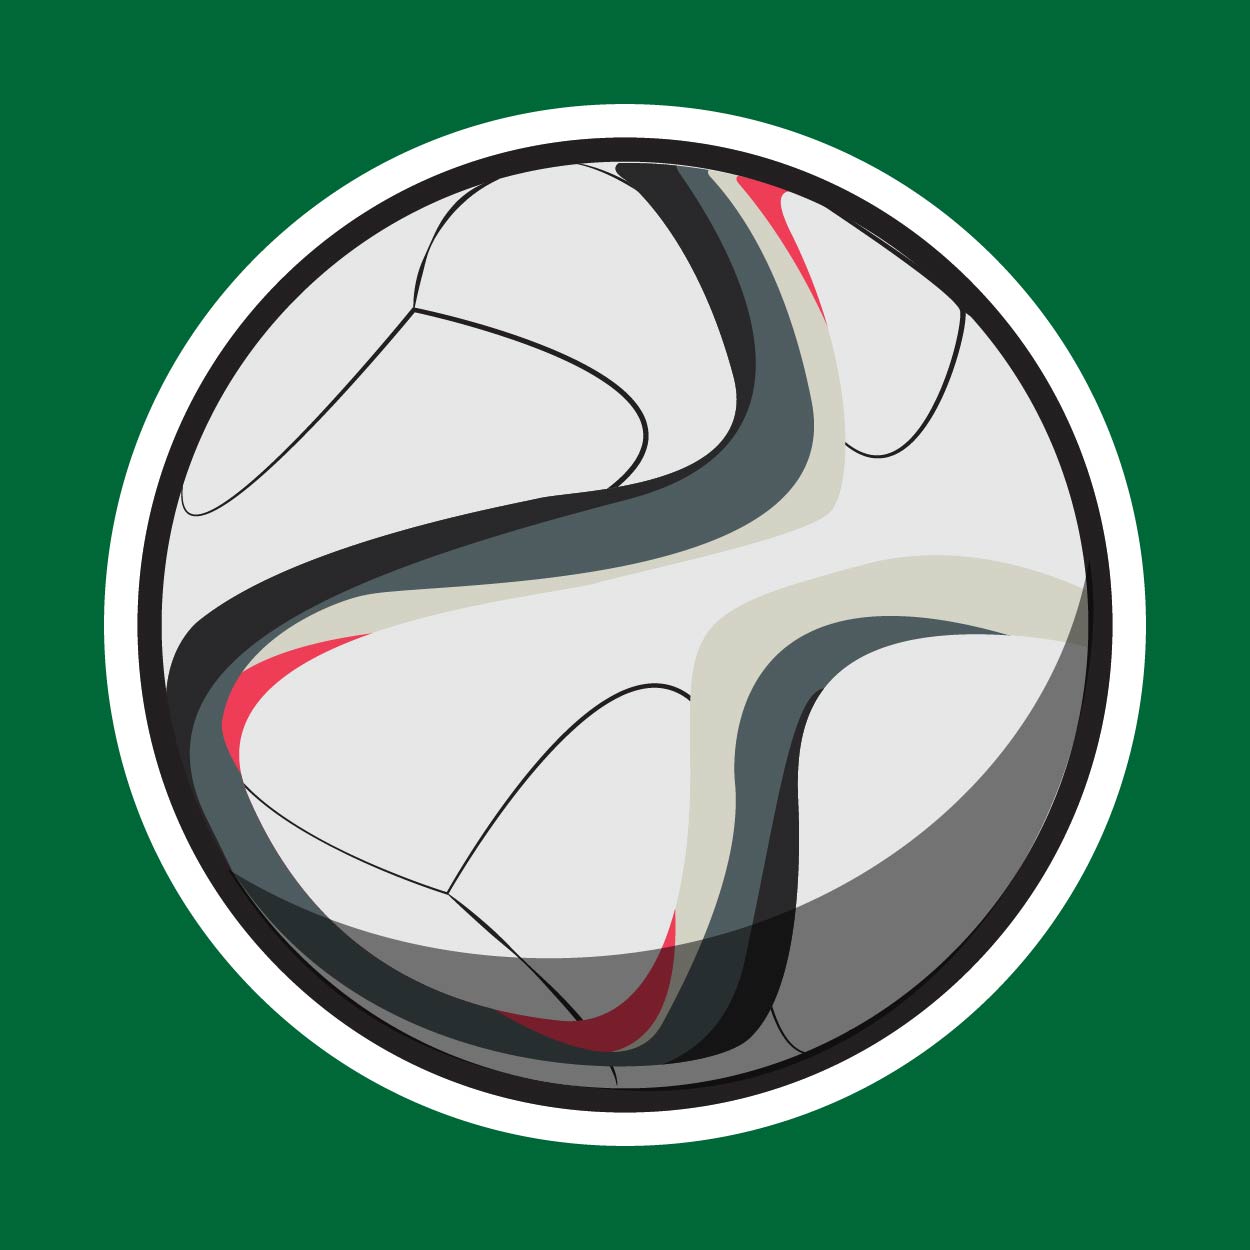 Flat design soccer ball series example.